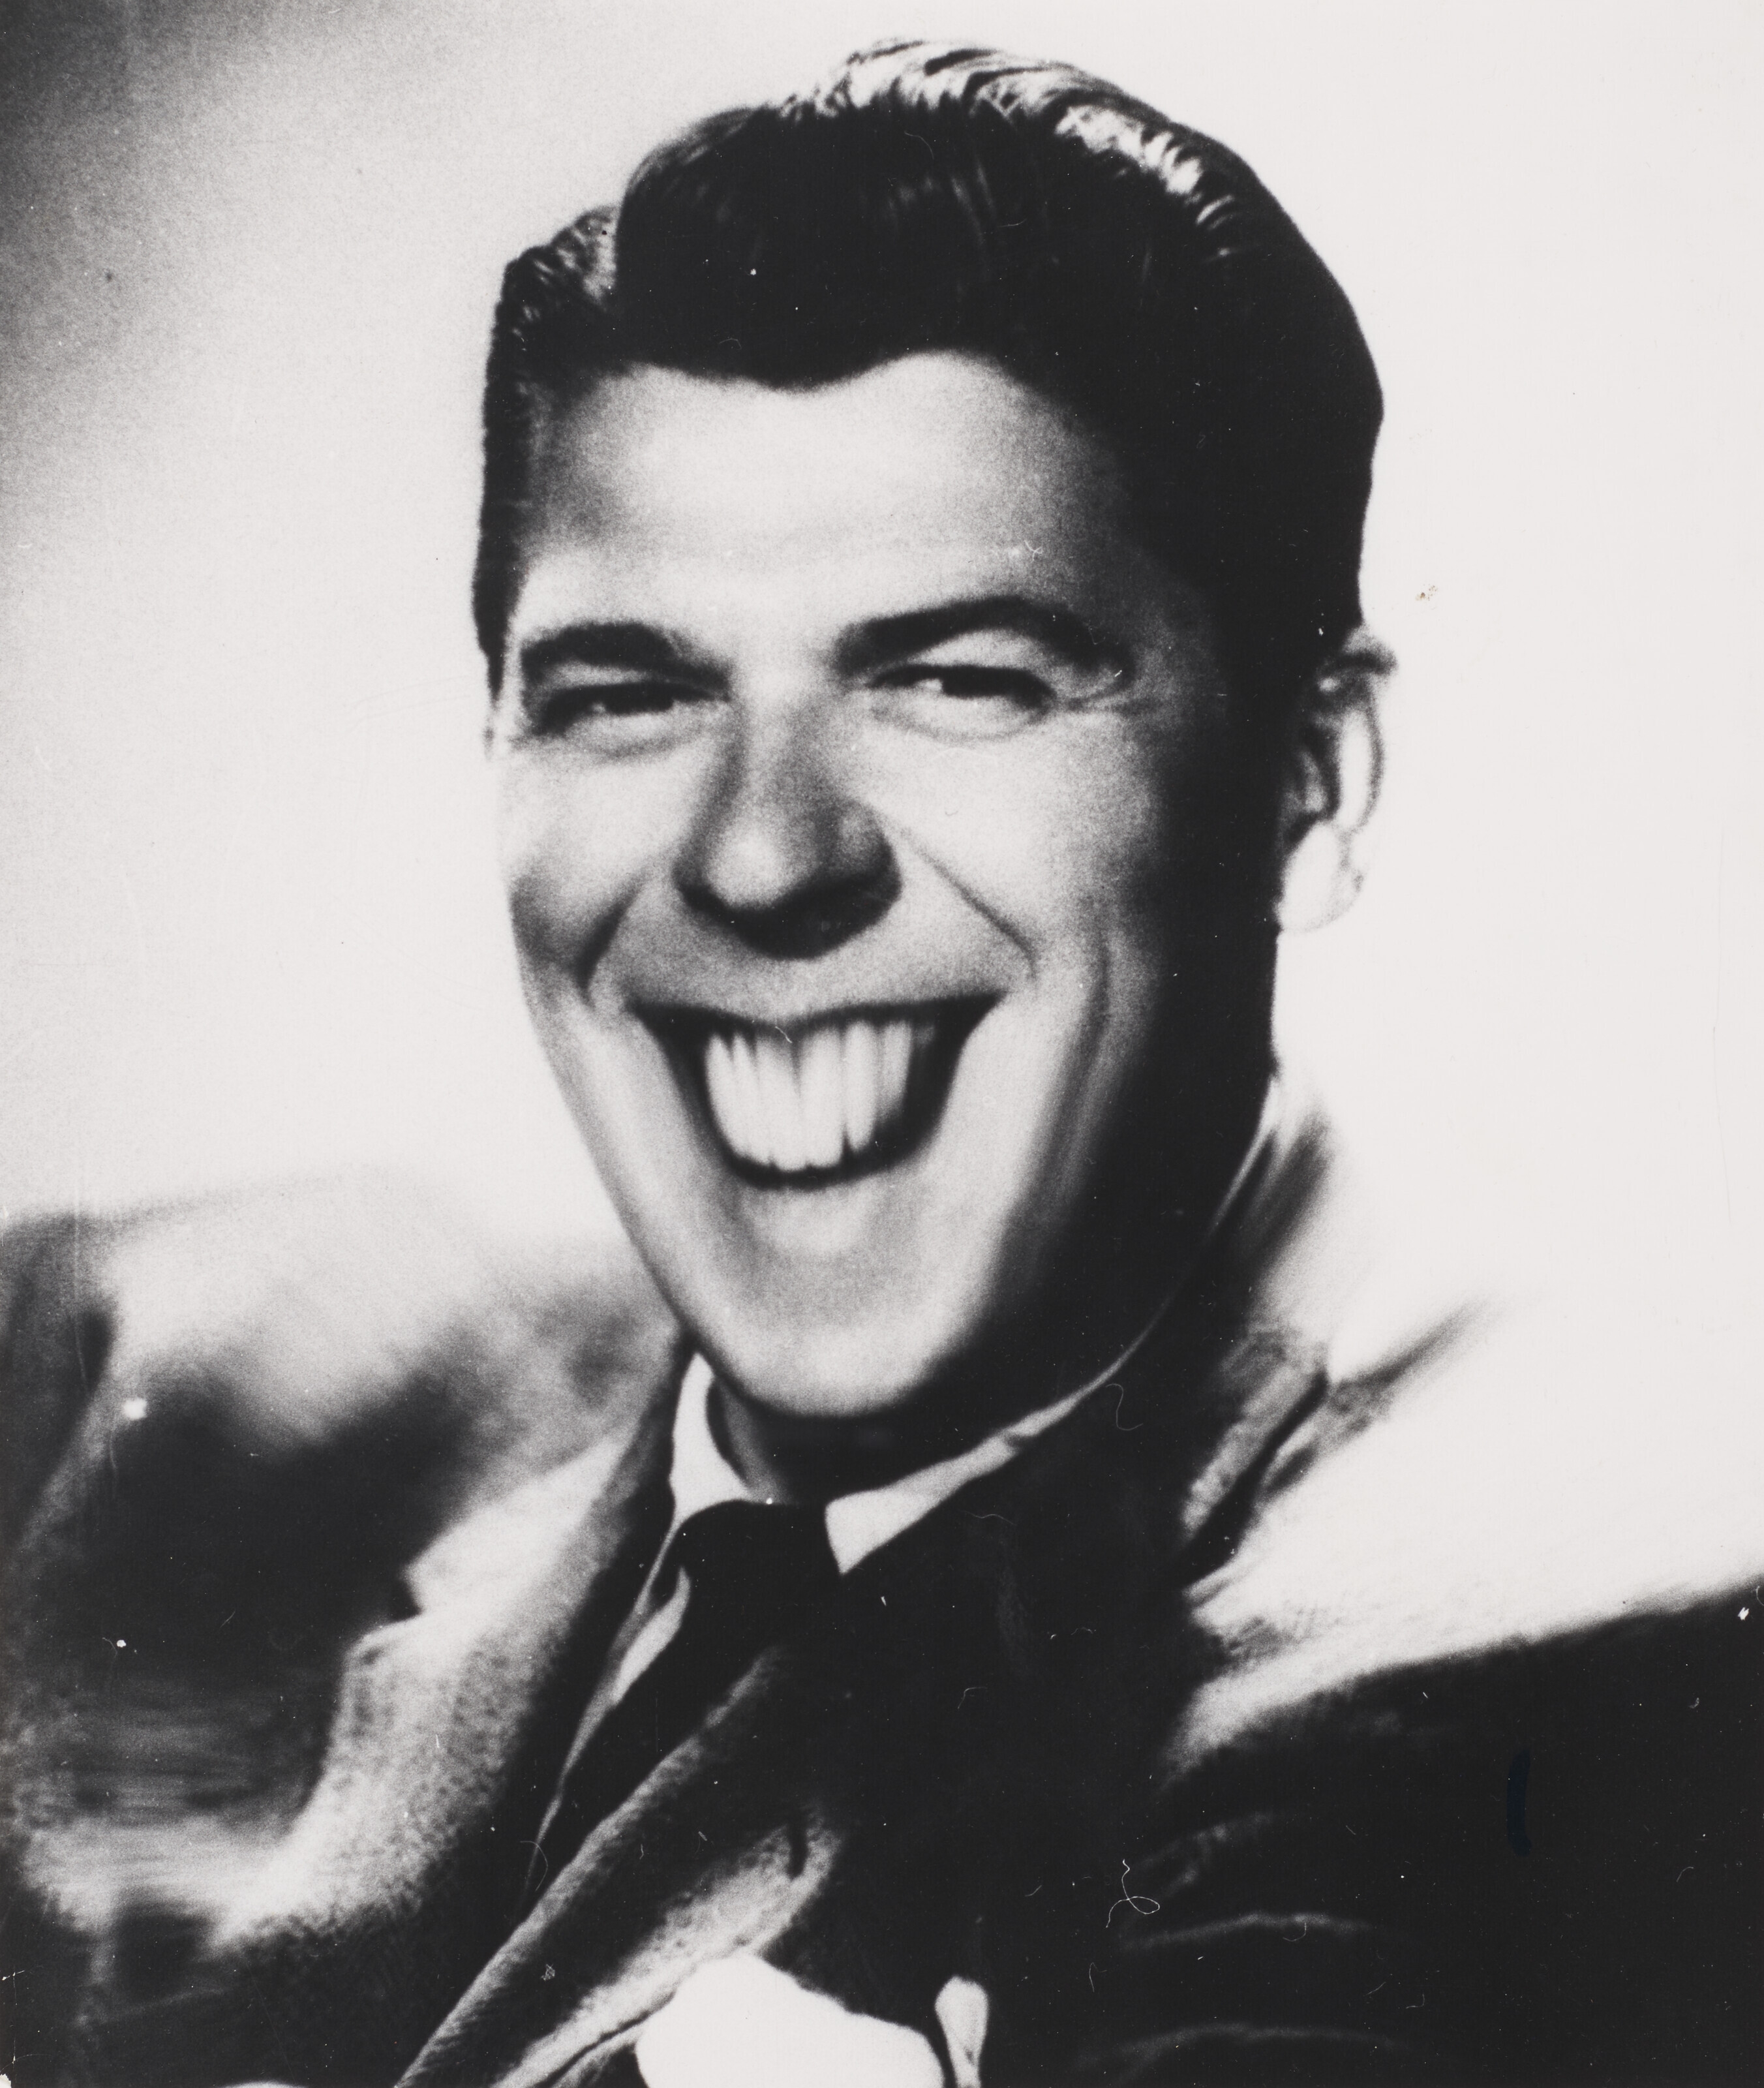 Ronald Reagan/Distortion, c. 1950s - Weegee